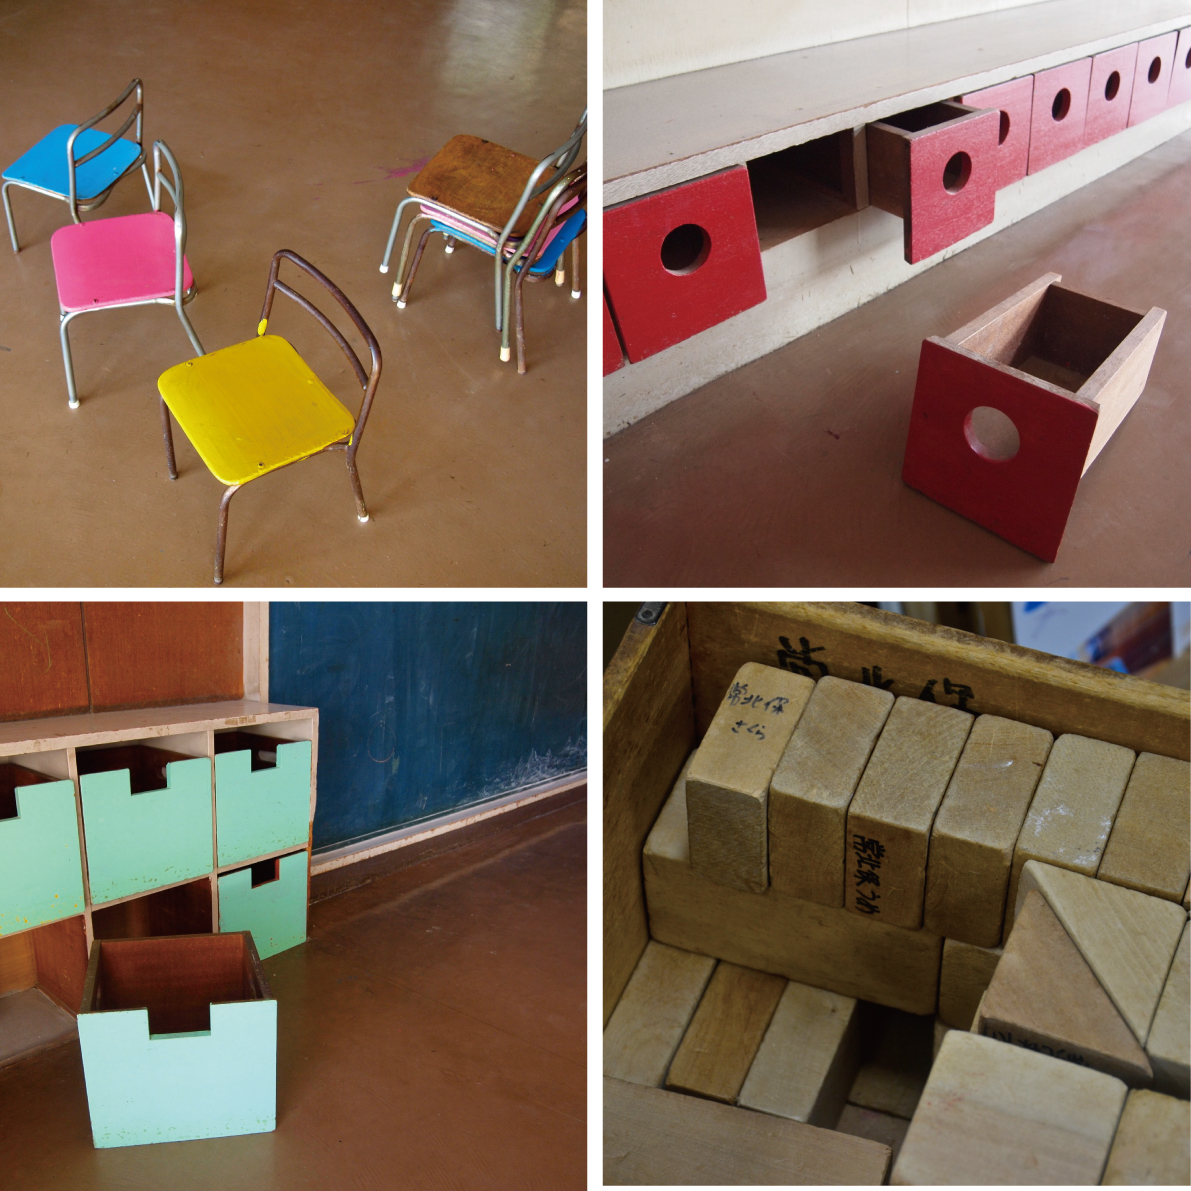 furniture desk chair kindergarten redesign Office kids